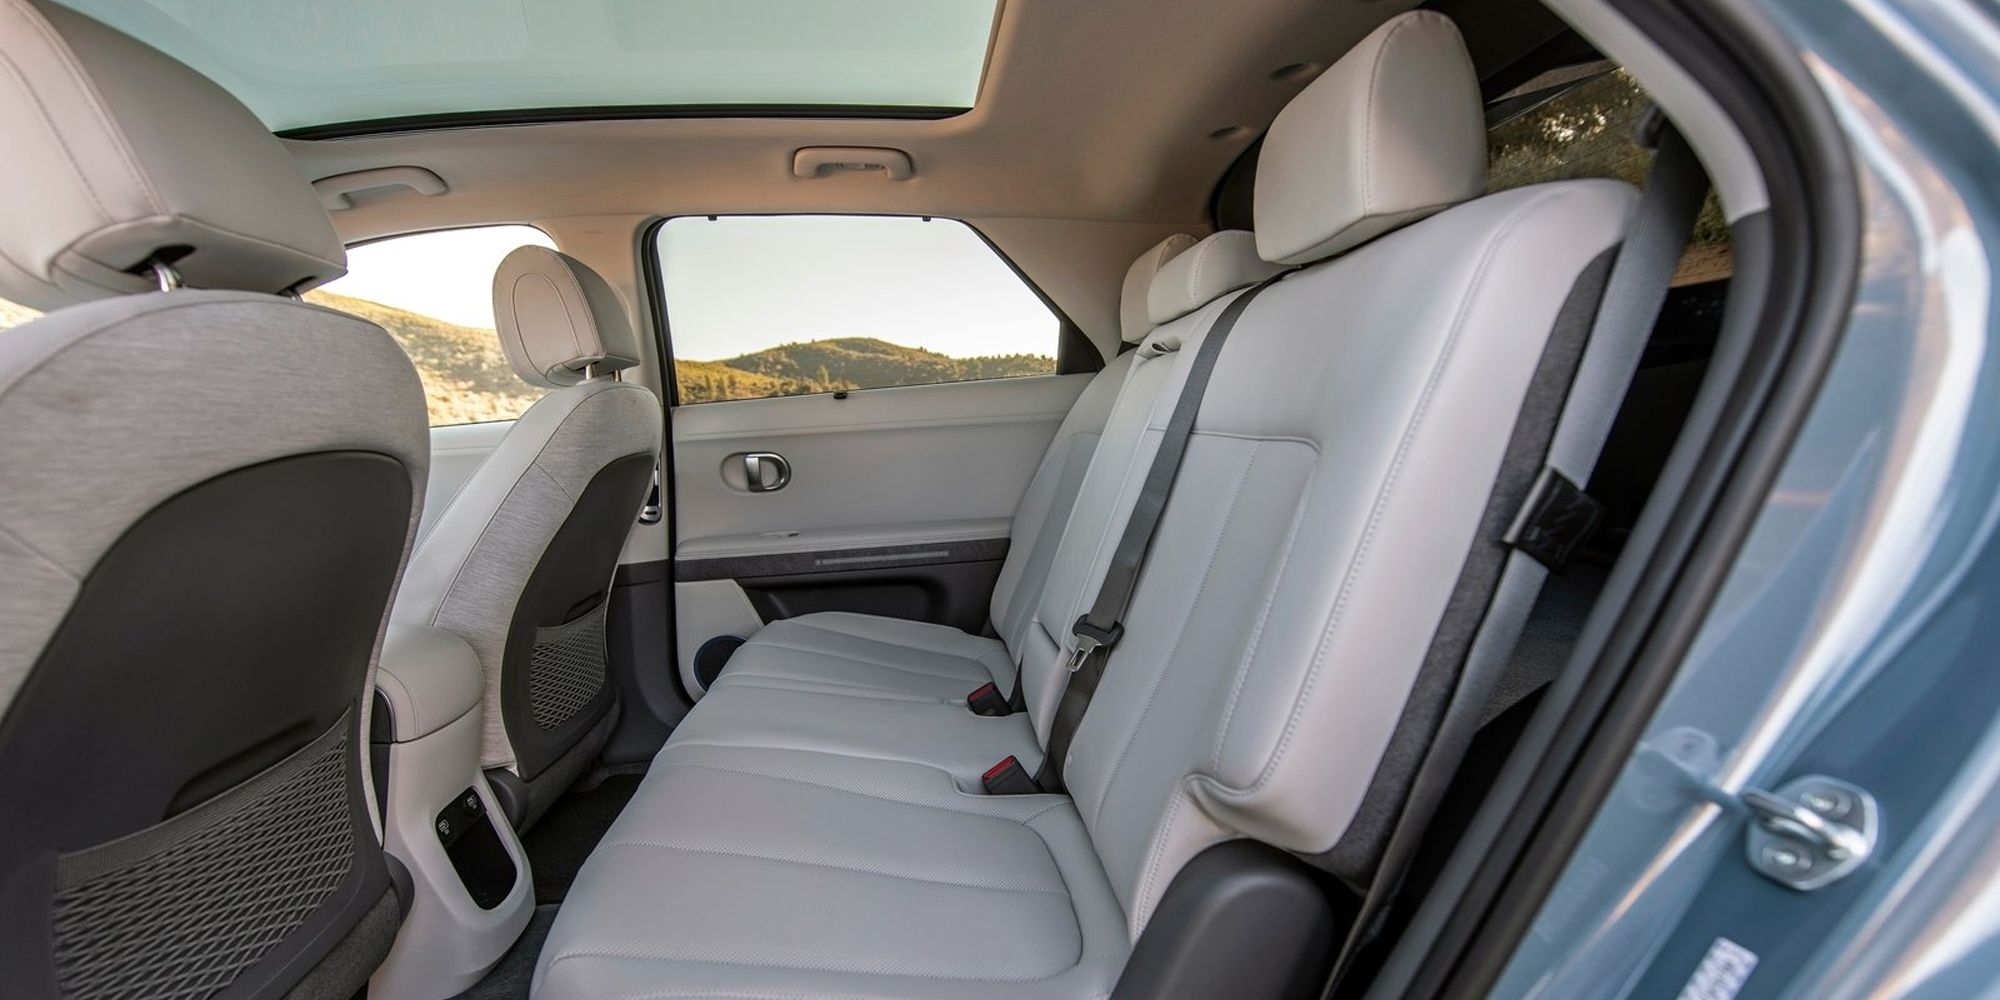 The rear seats in the Ioniq 5, white leather